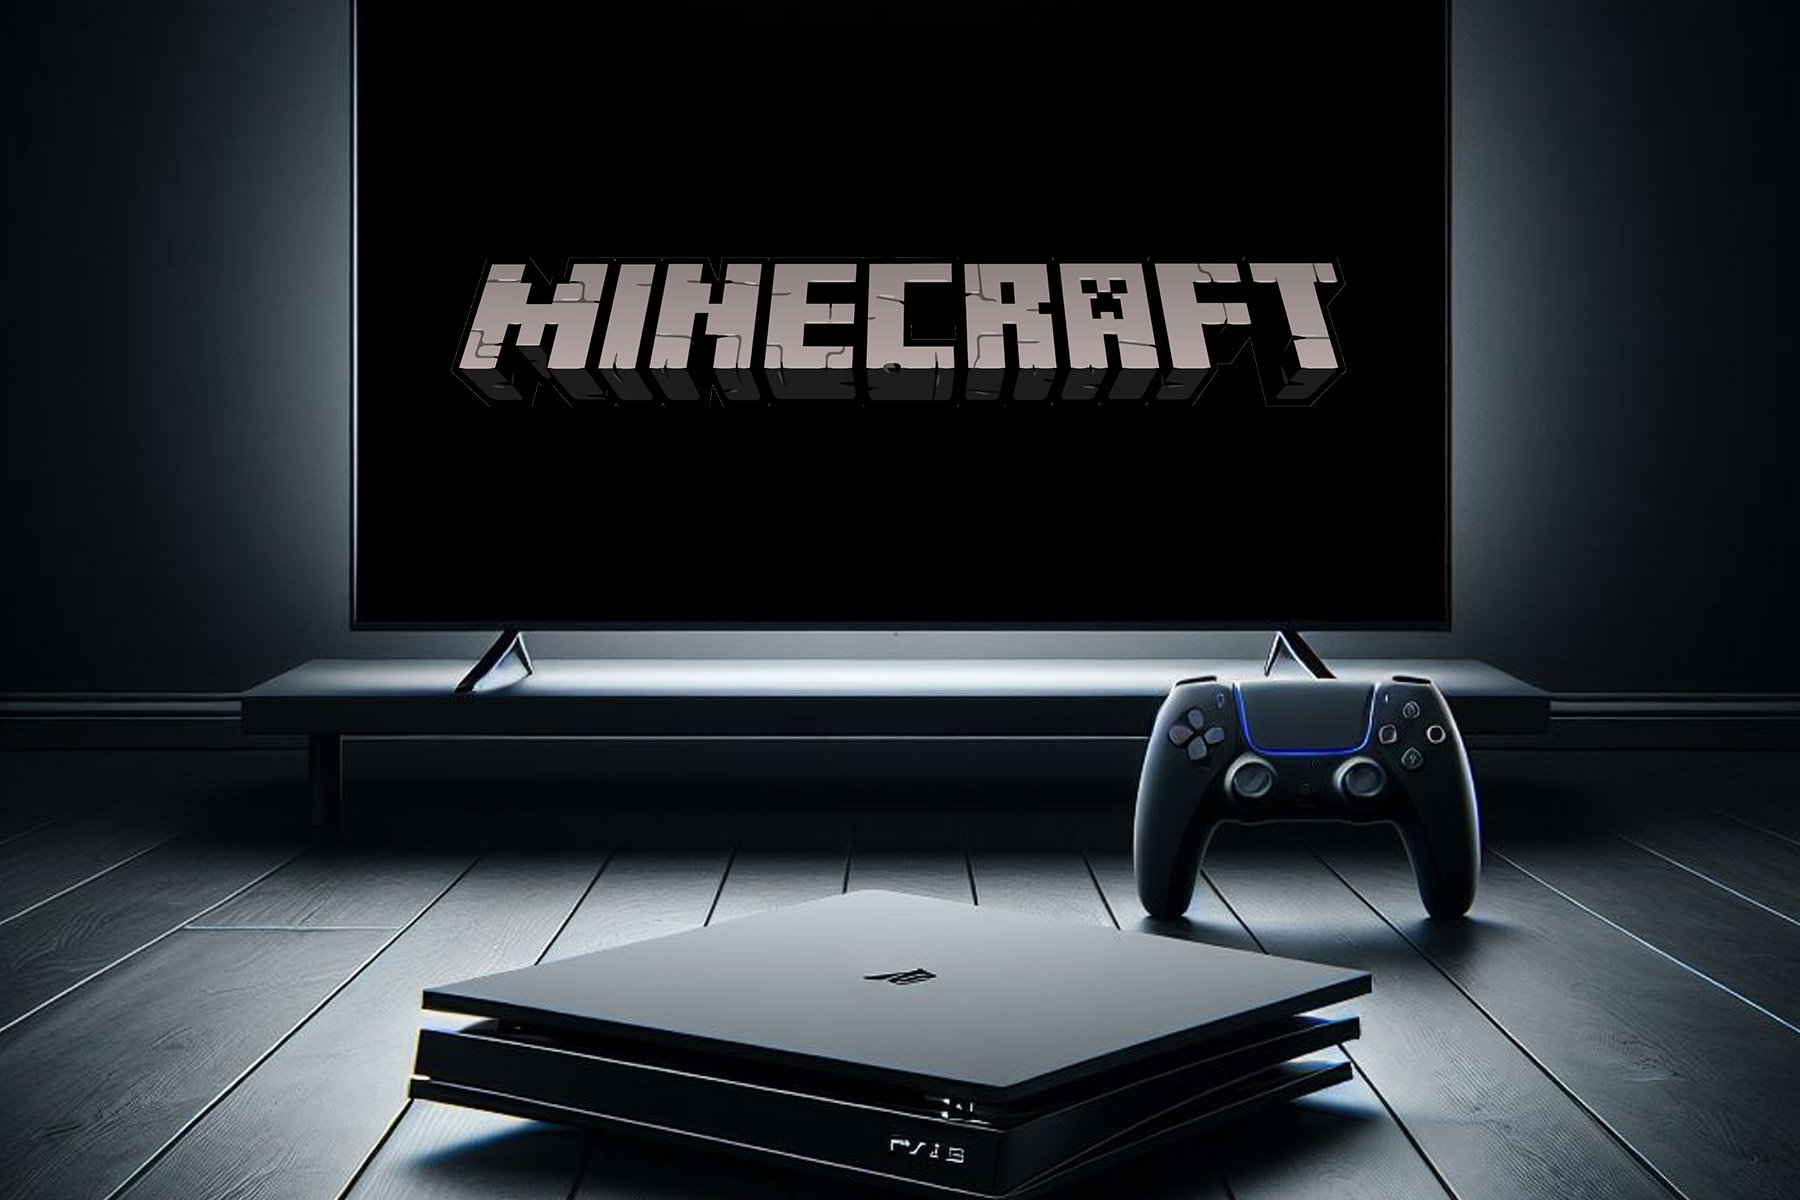 At long last, Minecraft will finally make its way to PlayStation 5